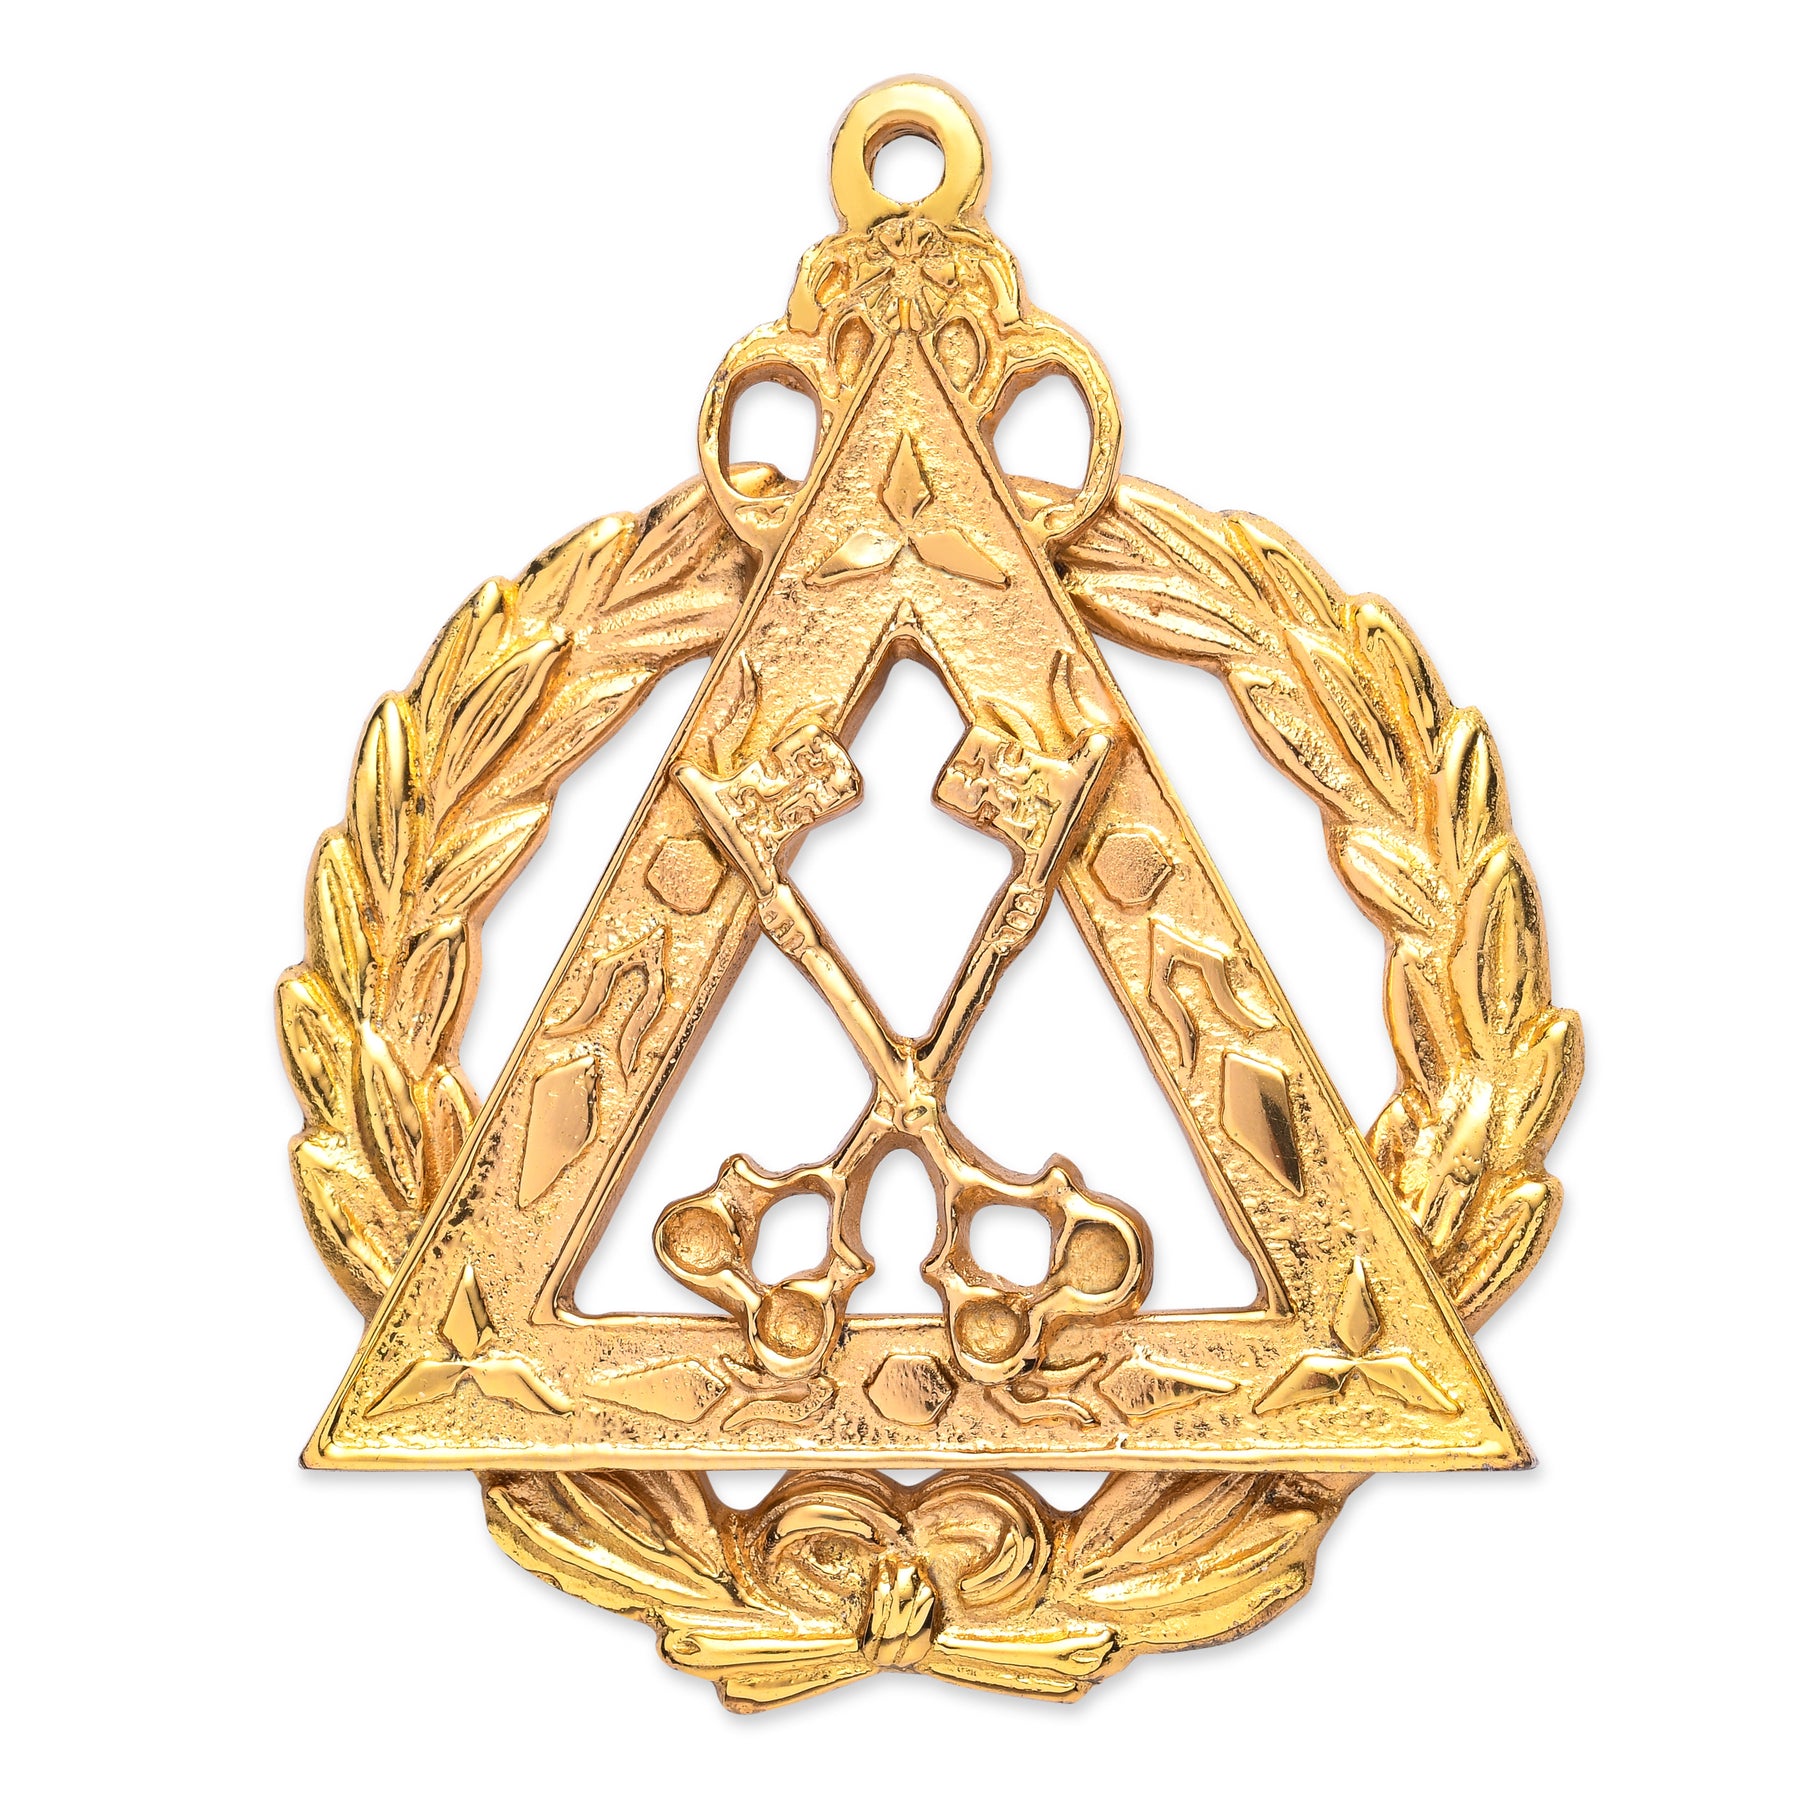 Grand Treasurer Royal Arch Chapter Officer Collar Jewel - Gold Metal - Bricks Masons